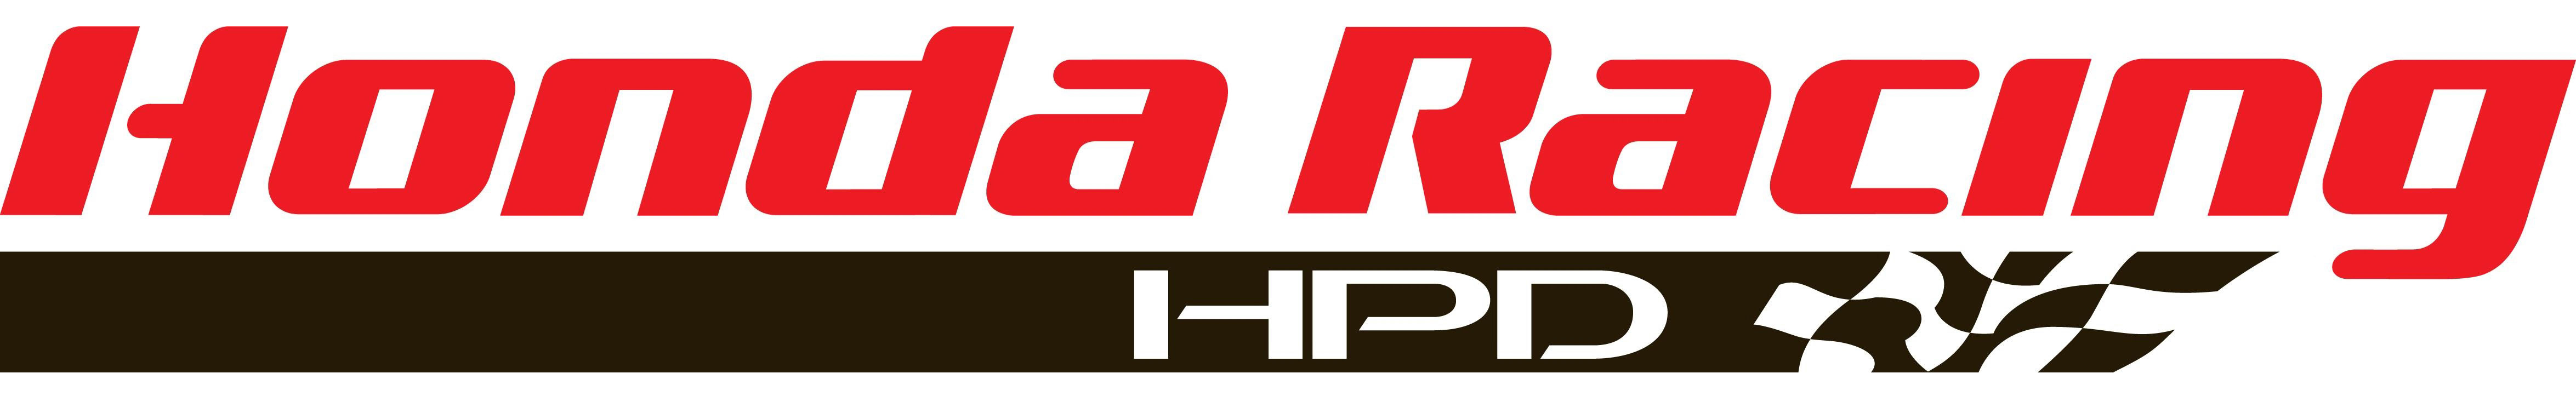 Flaming honda racing logo #2